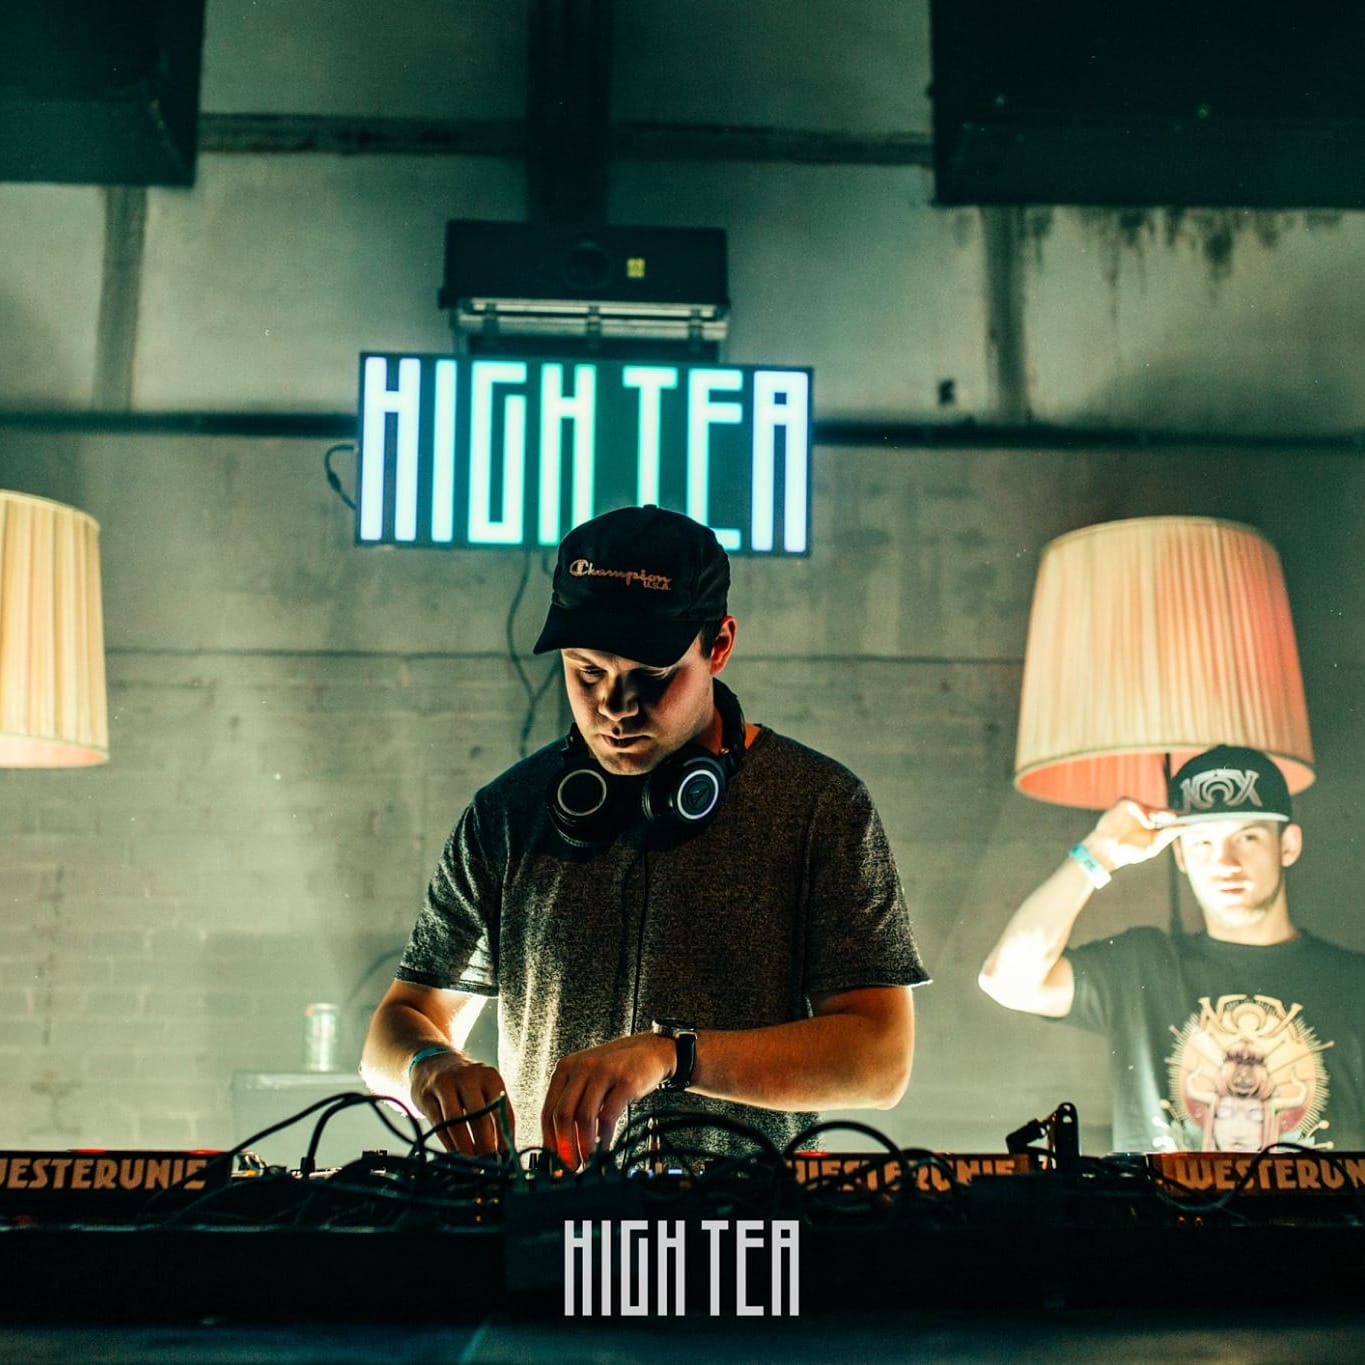 Kasger DJ at High Tea Amsterdam 2019